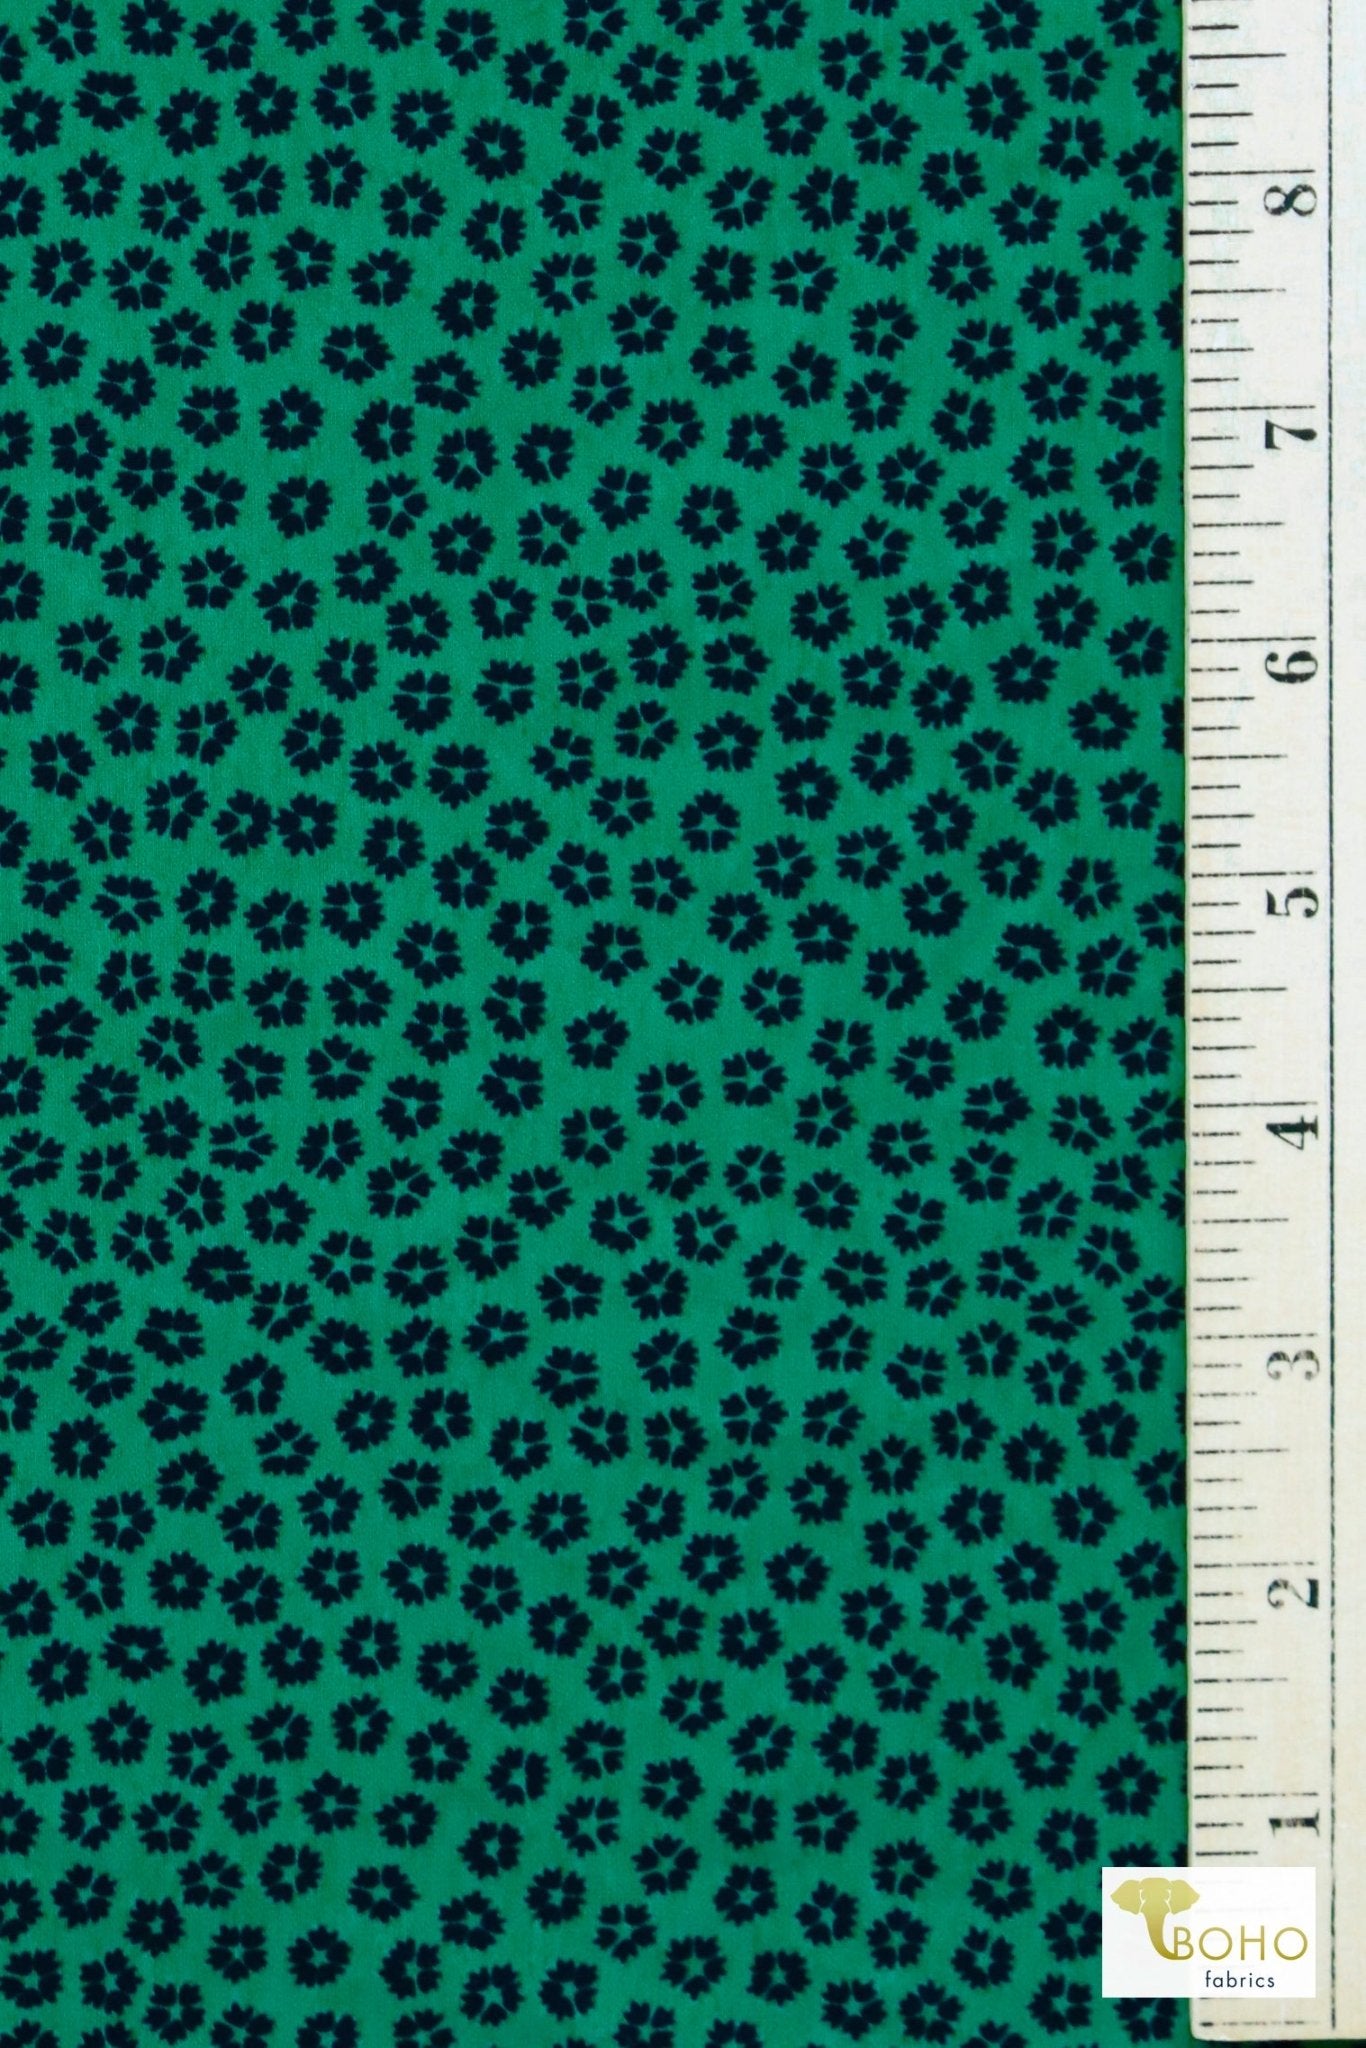 Black Mini-Florals on Green, Printed Swim Knit Fabric. - Boho Fabrics